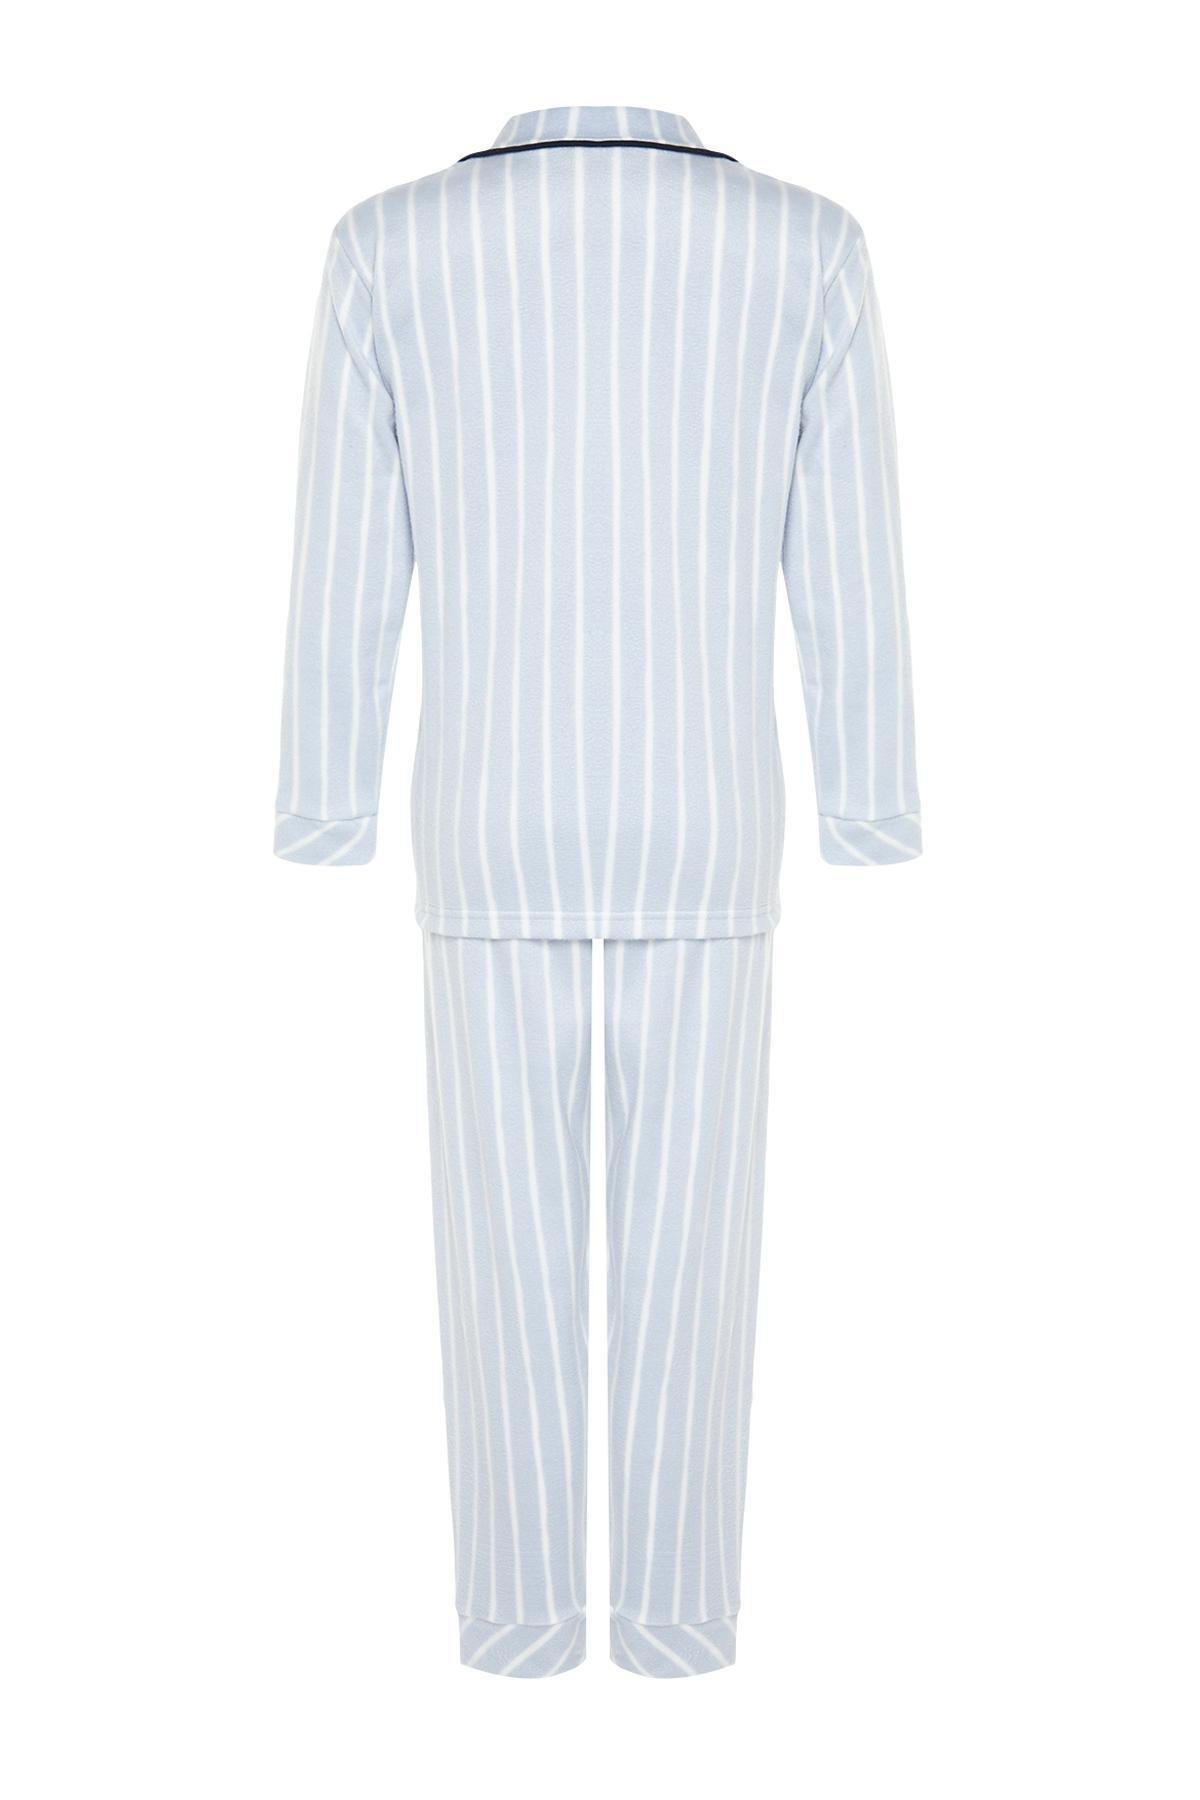 Trendyol - Blue Striped Pajama Set